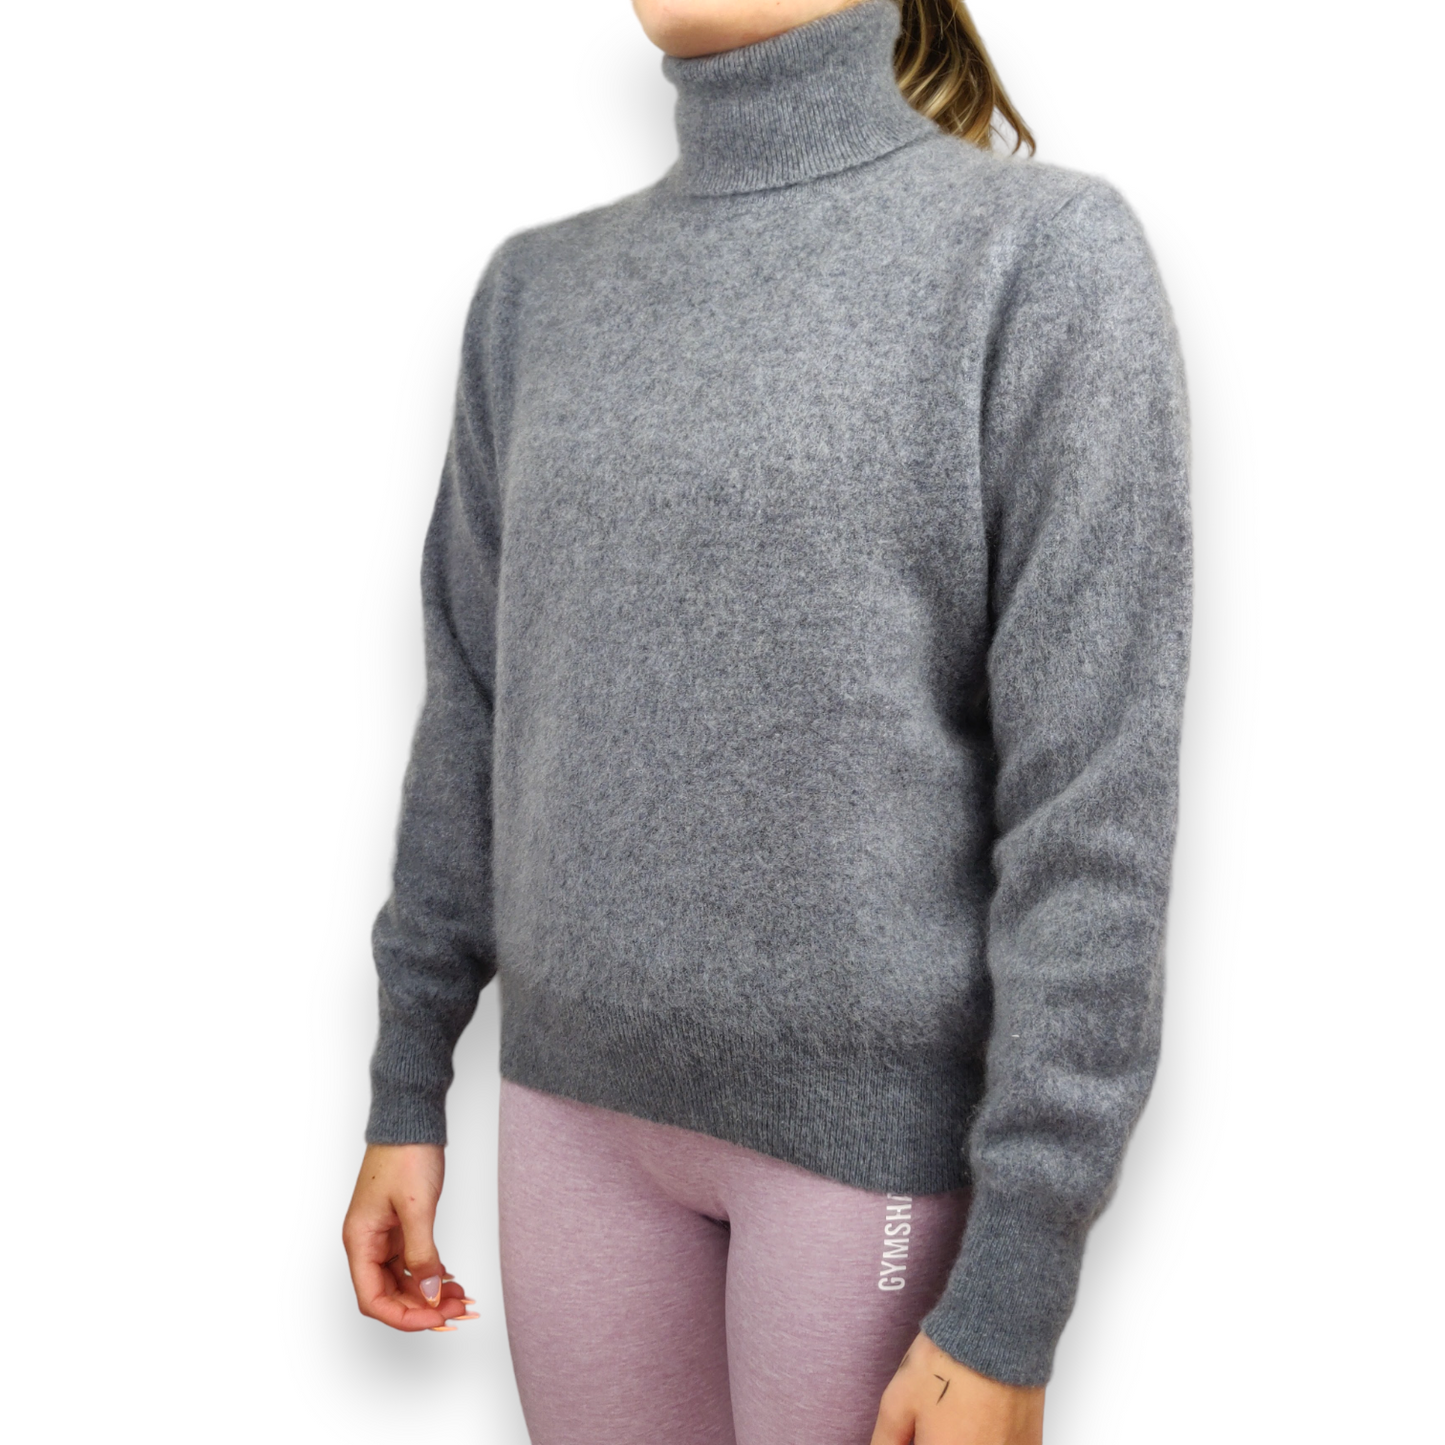 Yorn Grey 100% Cashmere High Neck Pullover Jumper Sweater Women Size Medium